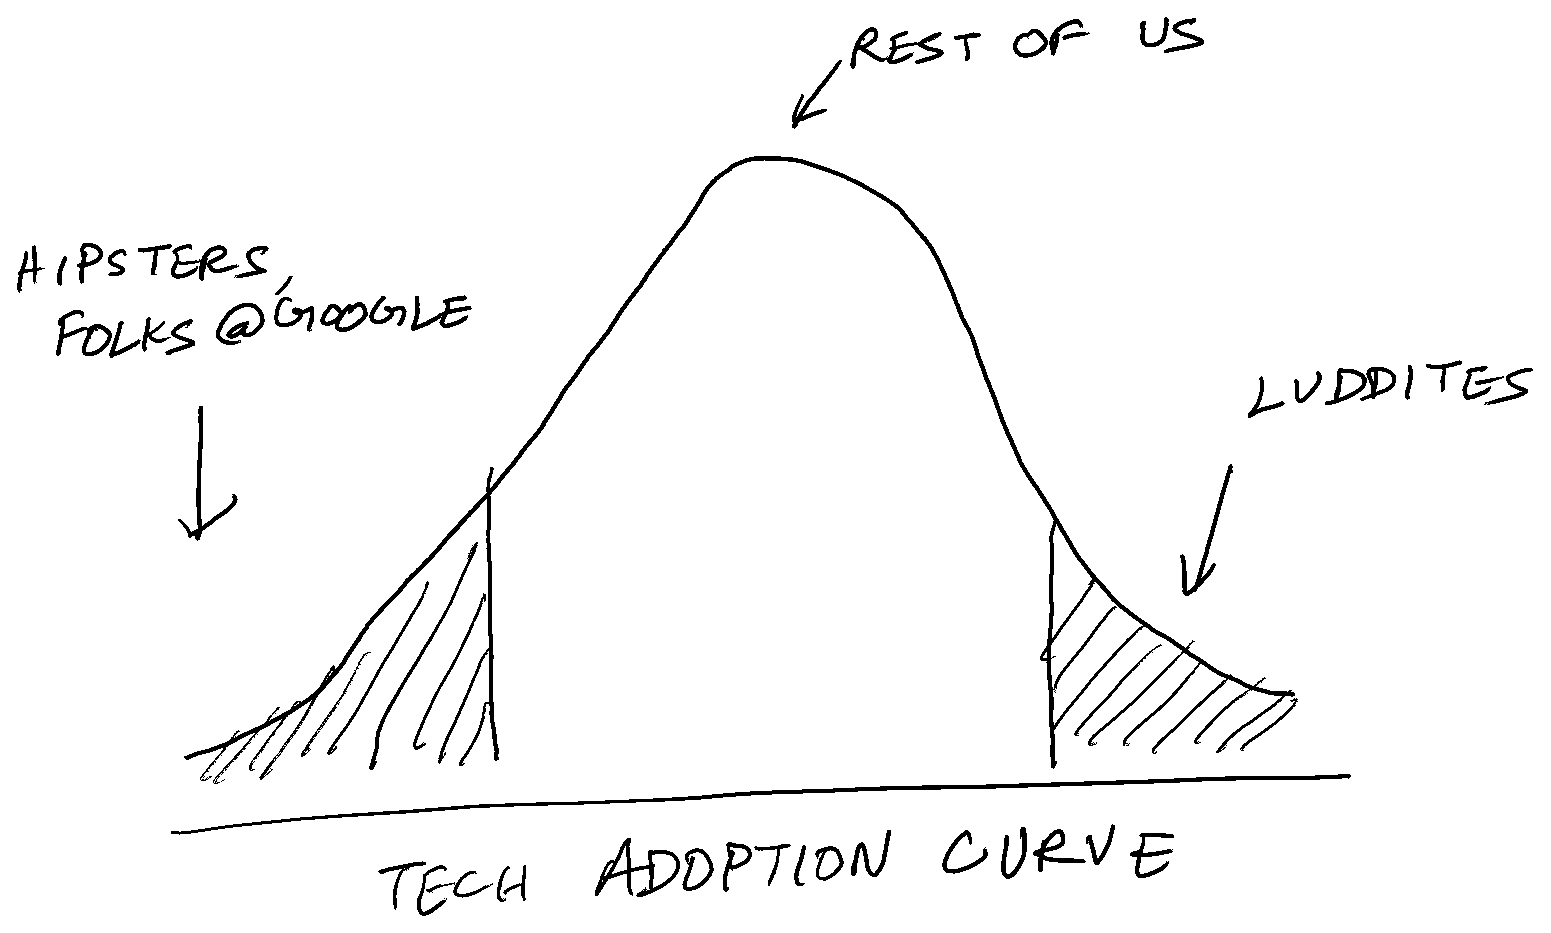 Tech adoption curve